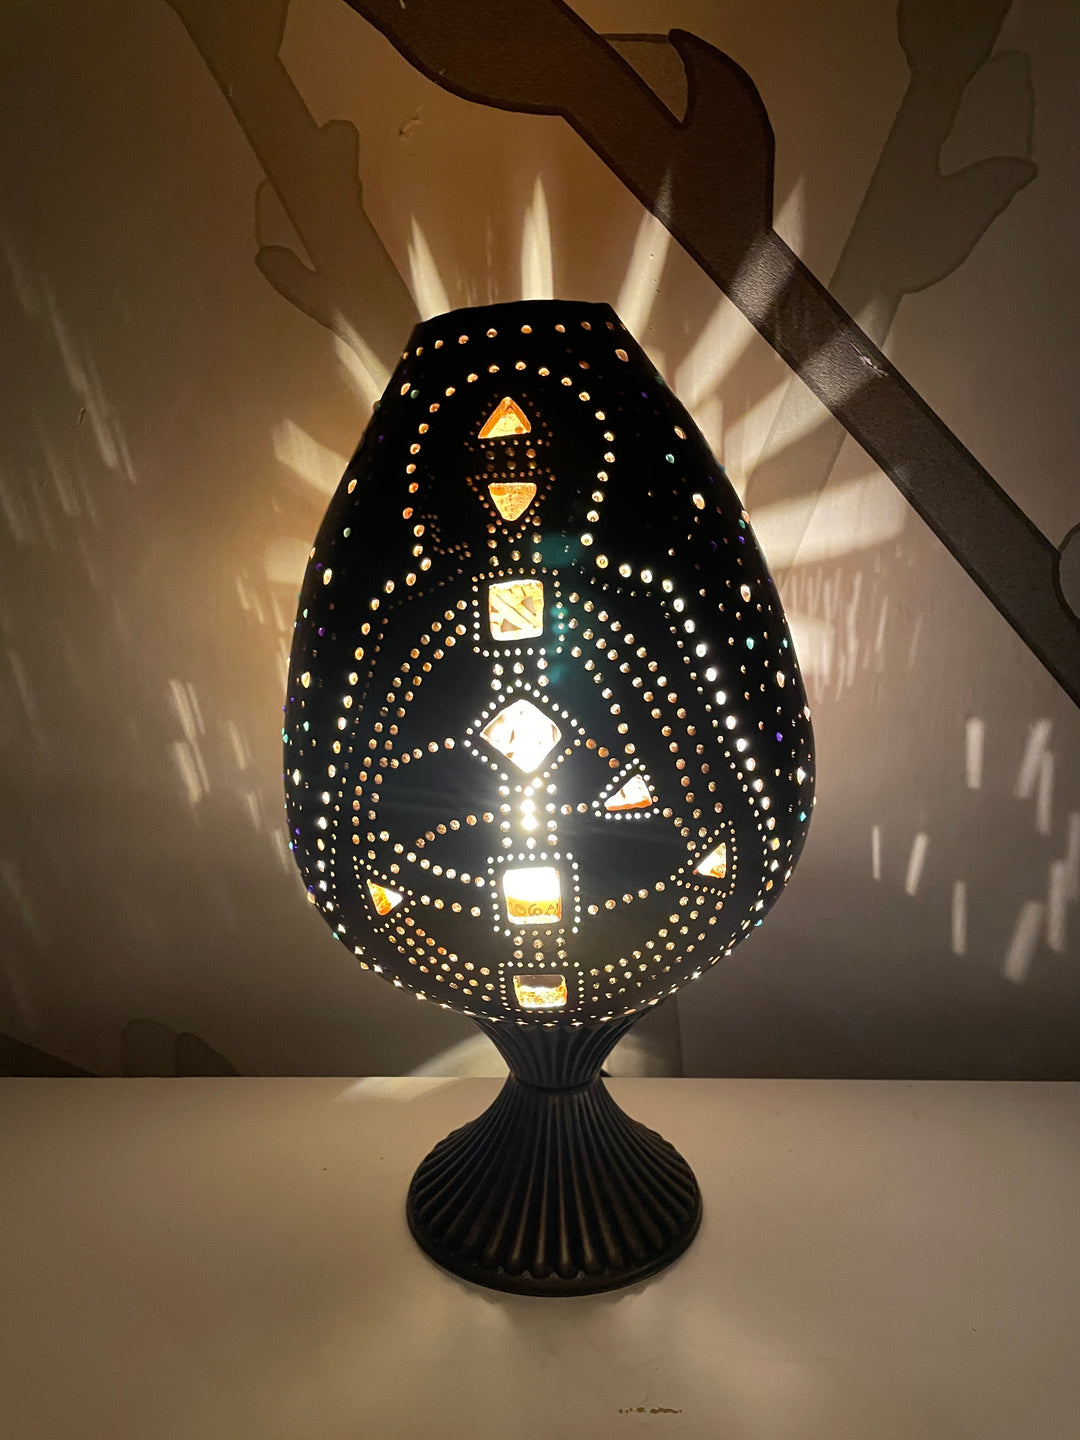 Gourd Lamp - Human Design 2